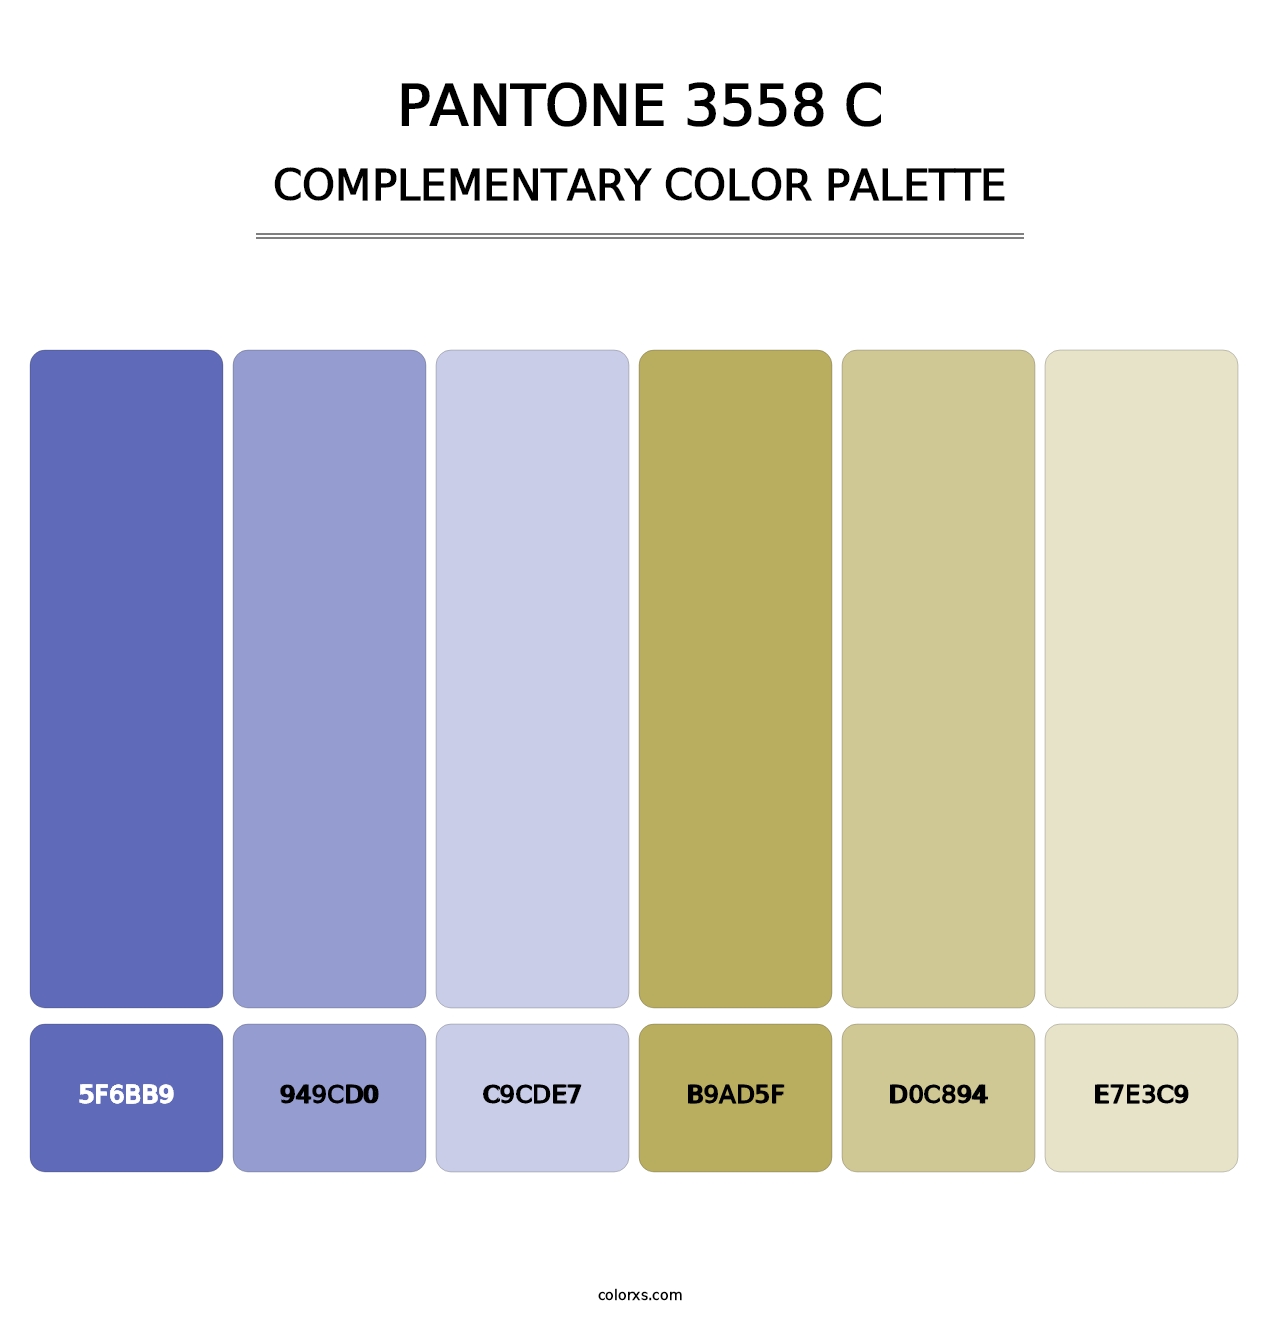 PANTONE 3558 C - Complementary Color Palette